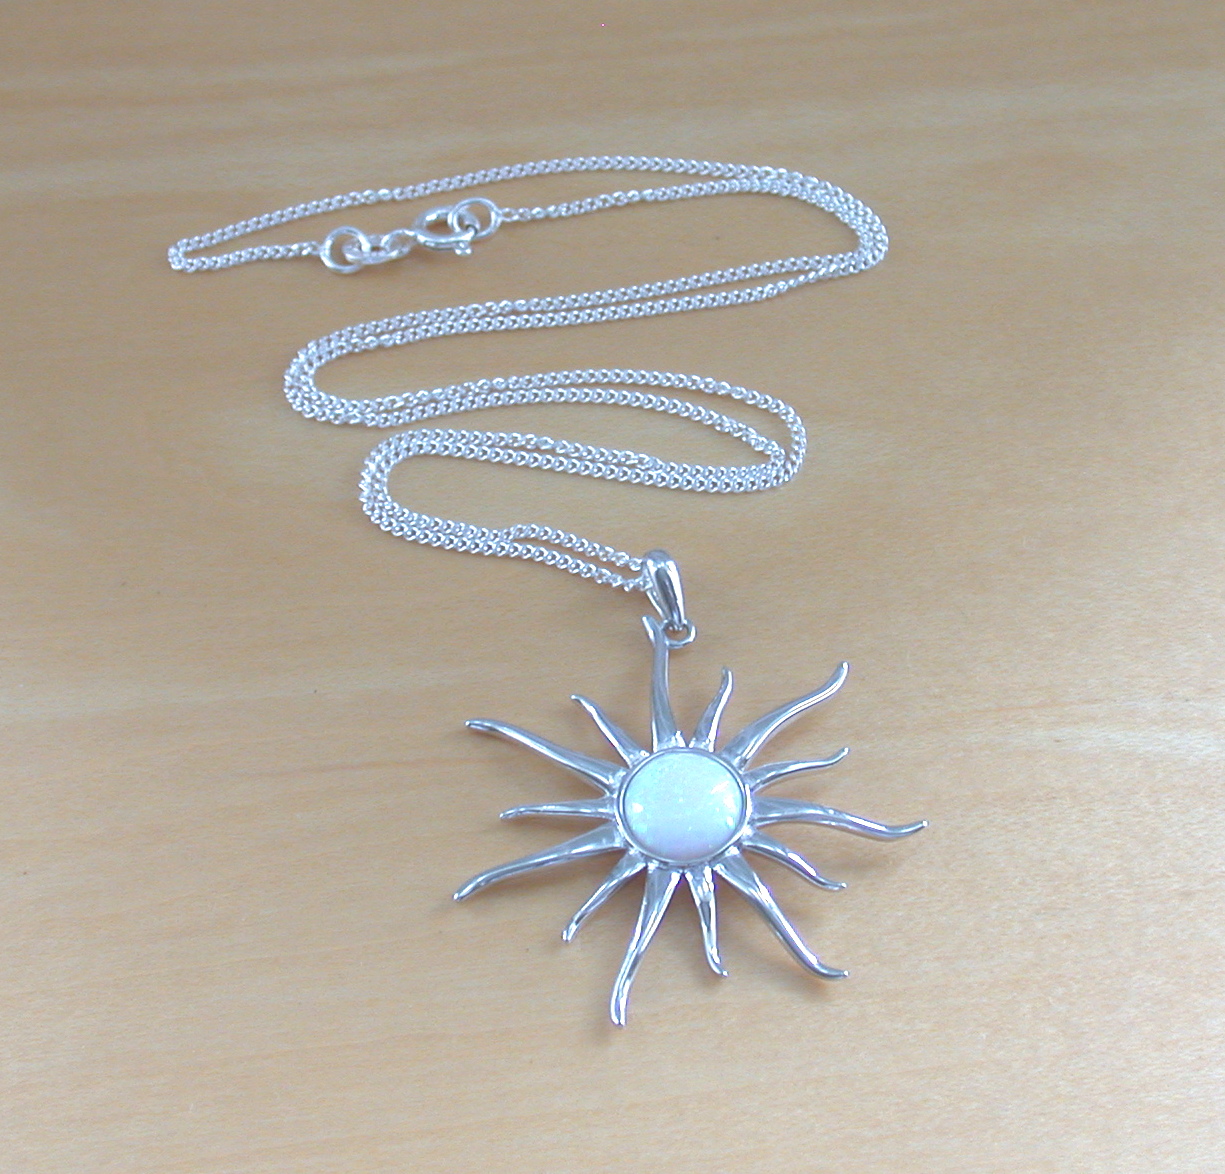 White Opal Necklace with Zircon Luxury Jewelry Set Gifts For Women Wedding Gift Sieraden Sieradensets Silver Sun Pendant Necklace & Sun Hoop Earrings Jewelry Set 